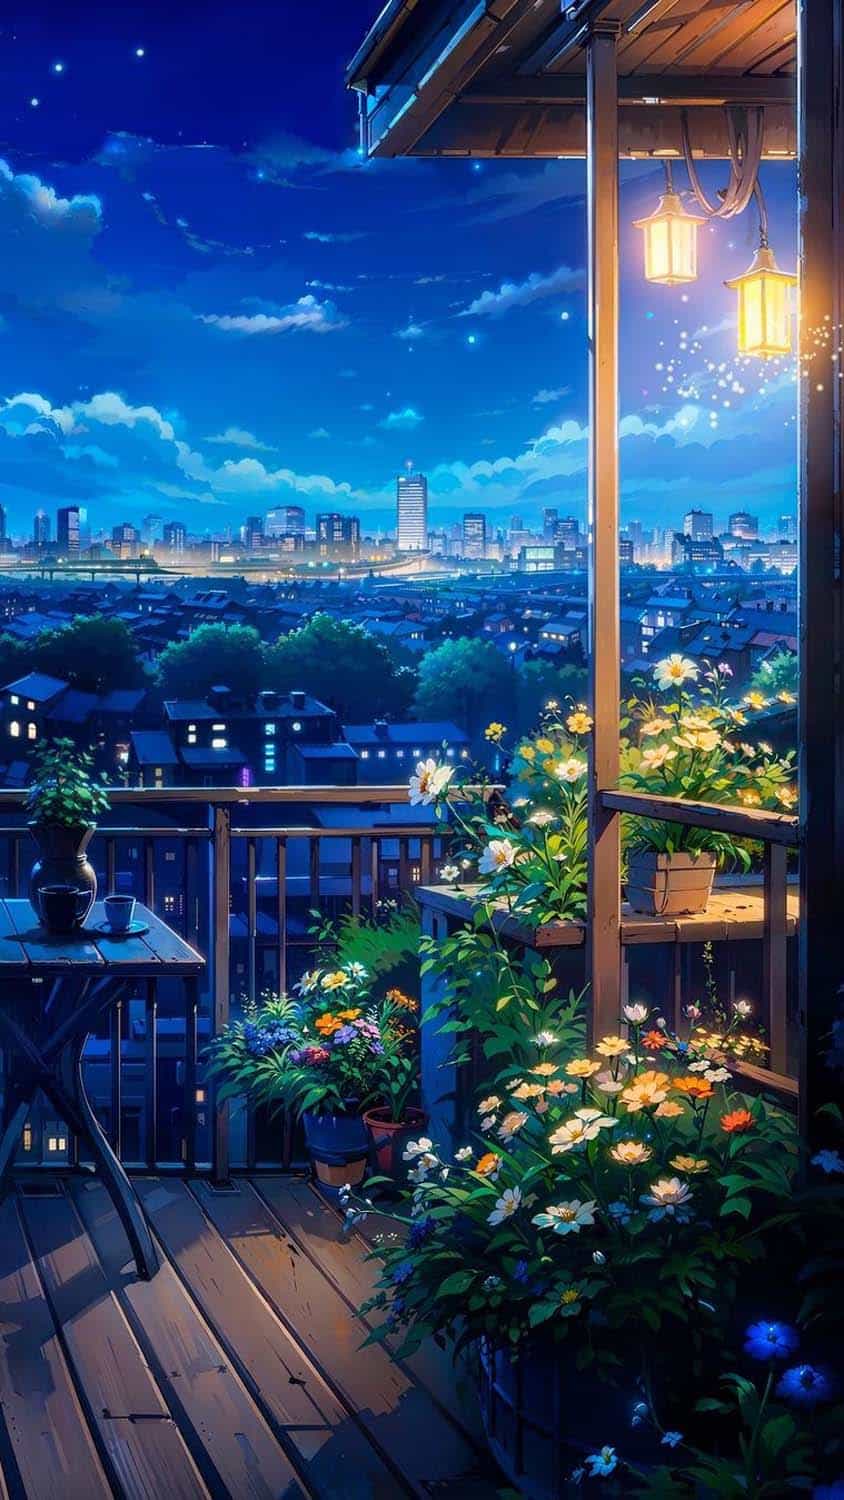 Evening Balcony City View 4K Wallpaper